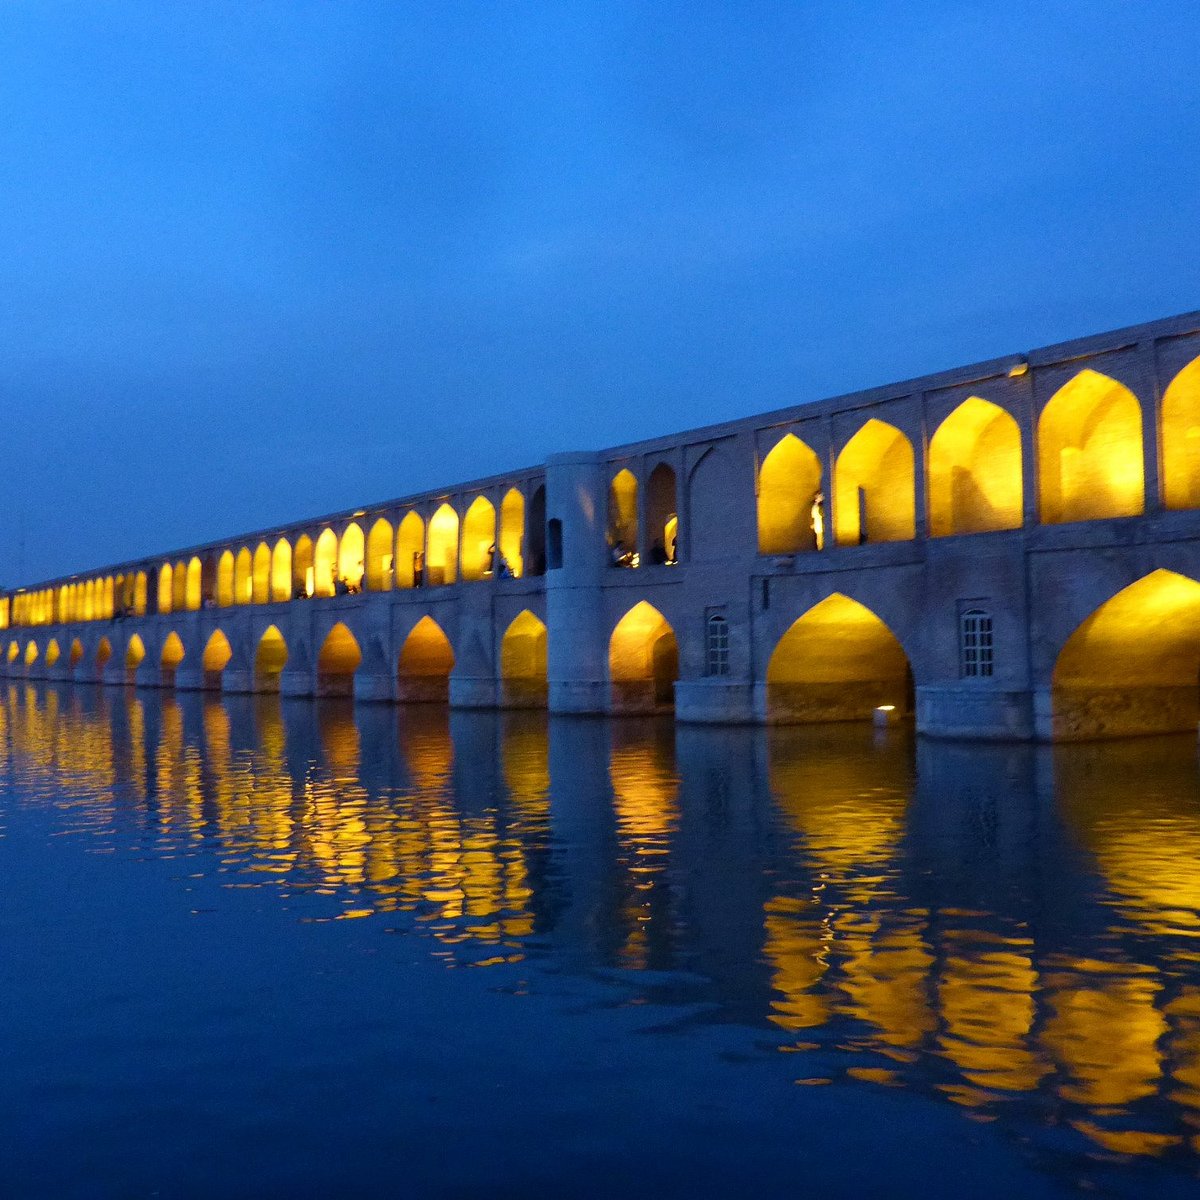 Si O Se Pol Bridge (Isfahan) - All You to BEFORE You Go